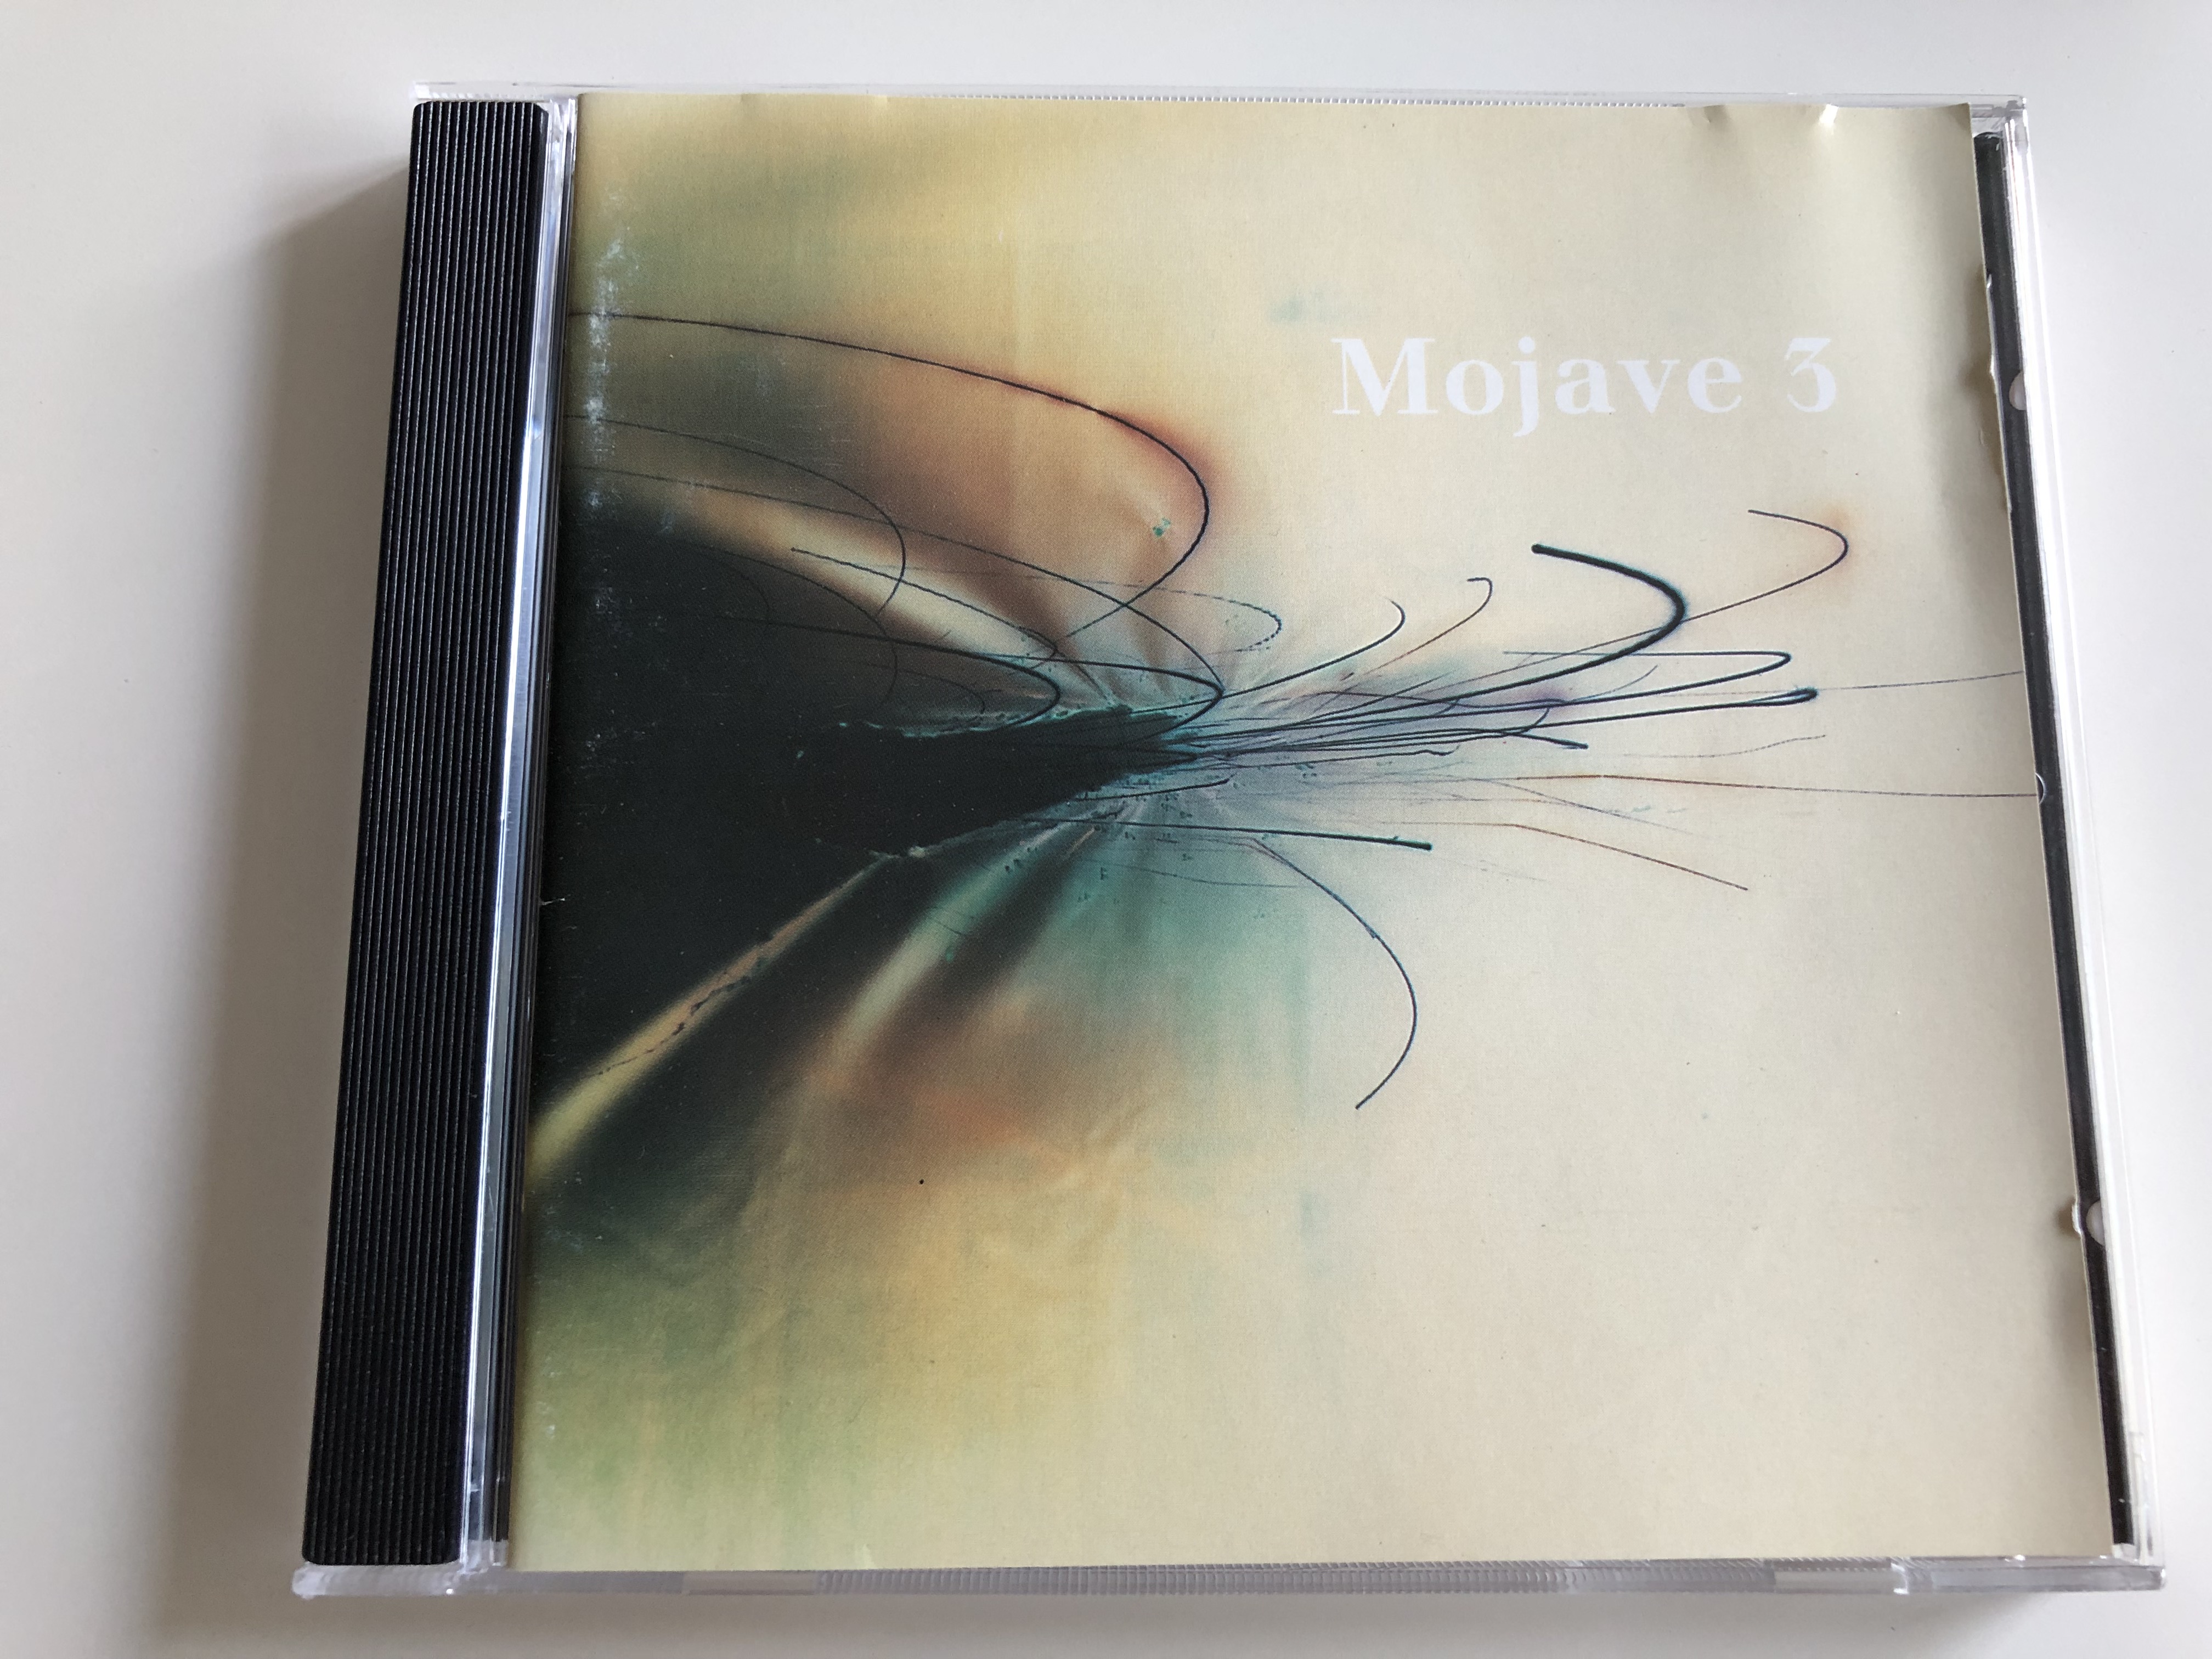 mojave-3-ask-me-tomorrow-audio-cd-1995-cad-5013-1-.jpg